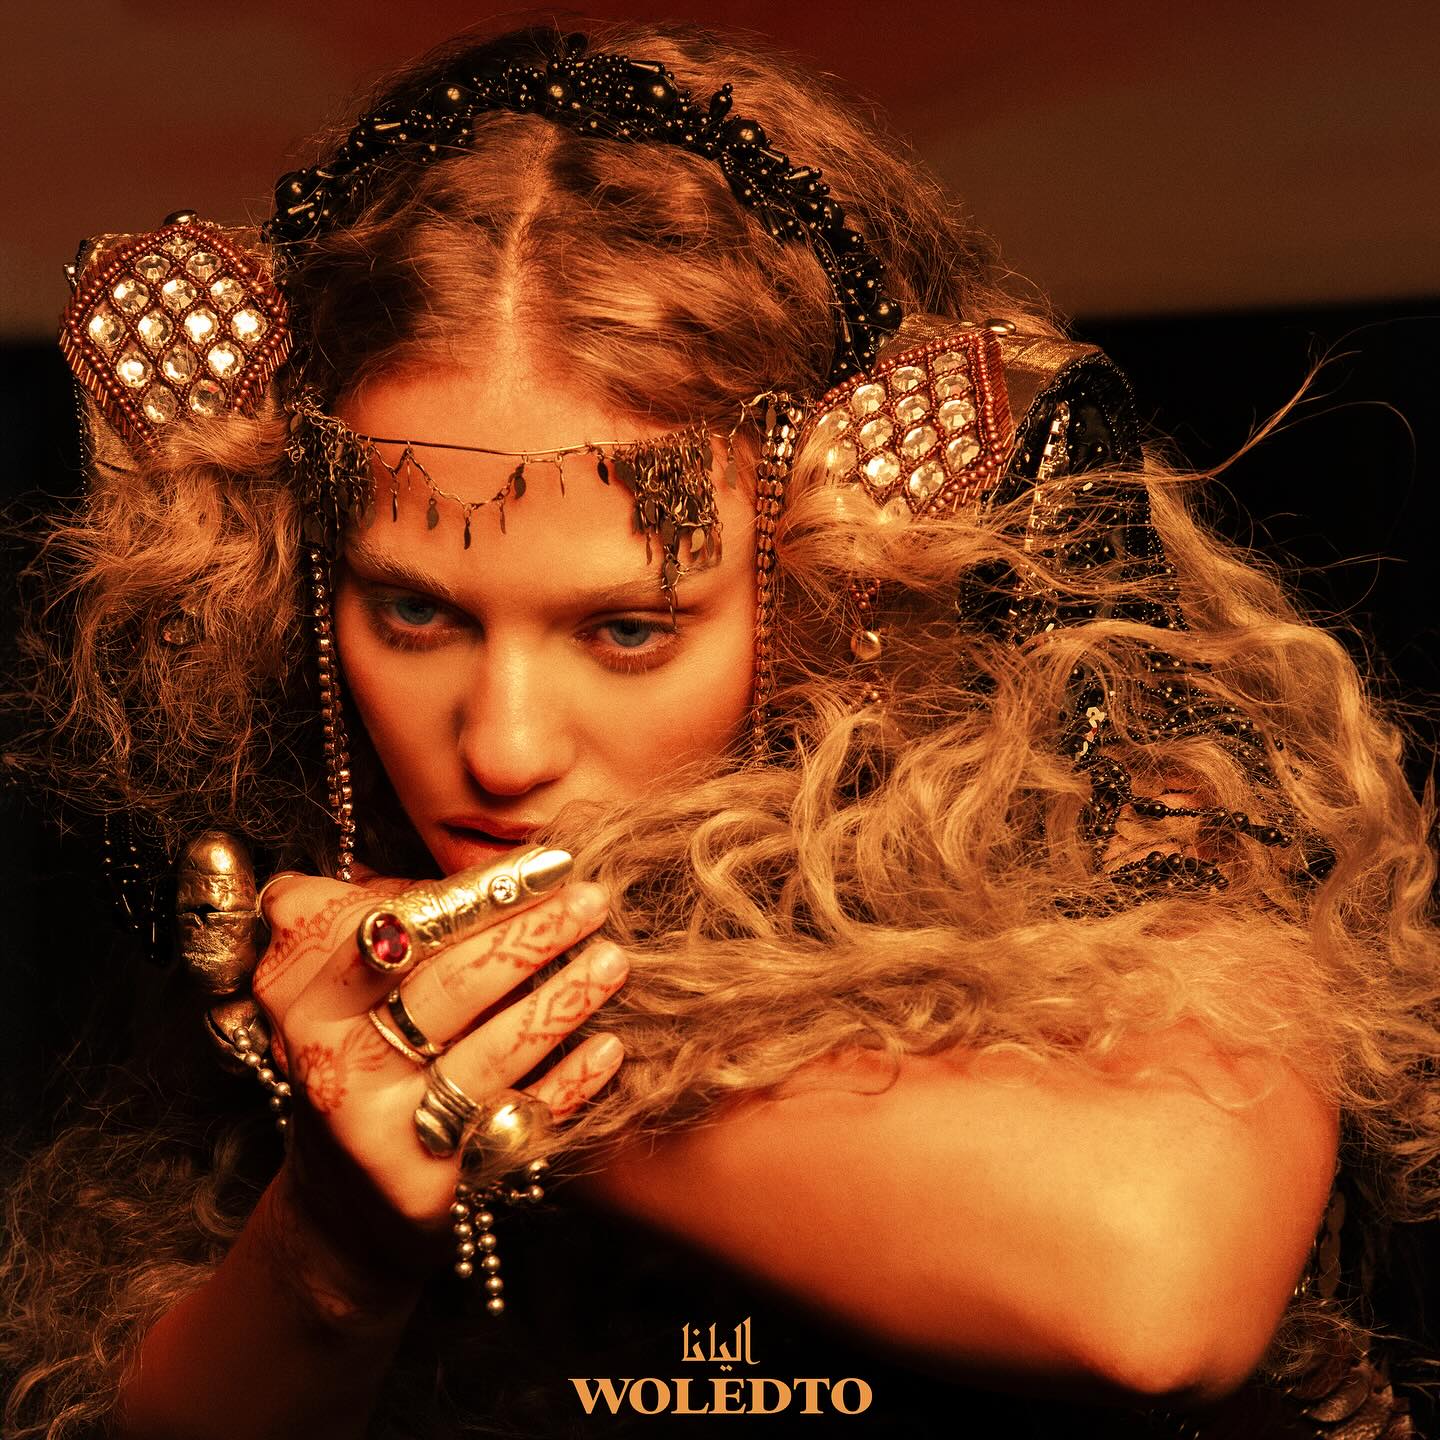 Elyanna’s New Album “Woledto”: A Unique Cultural Experience